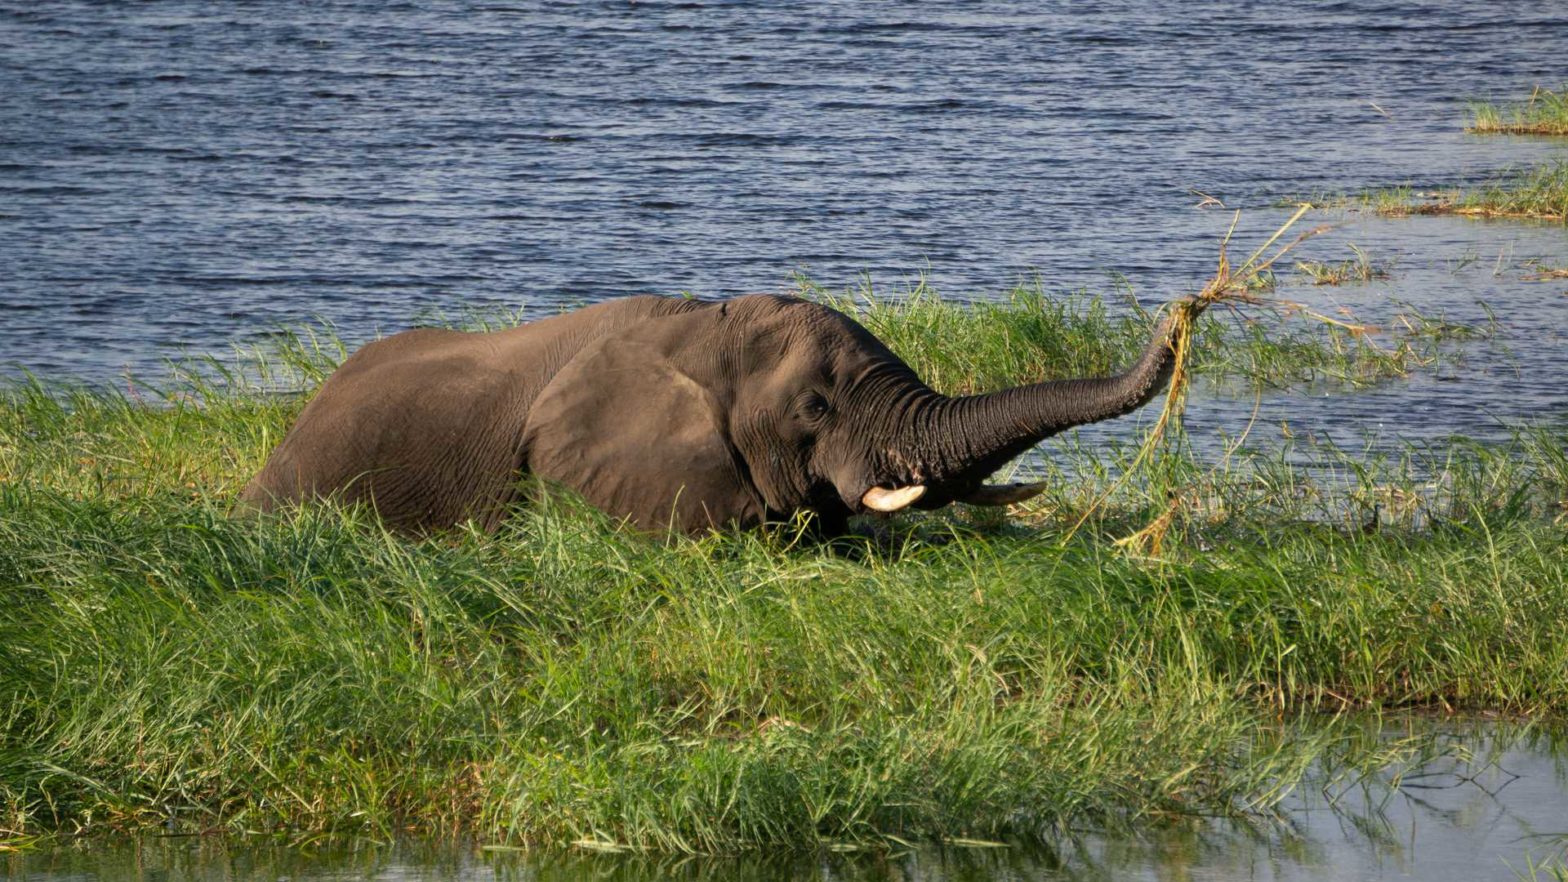 Elephant grazing in the Chobe river, Botswana